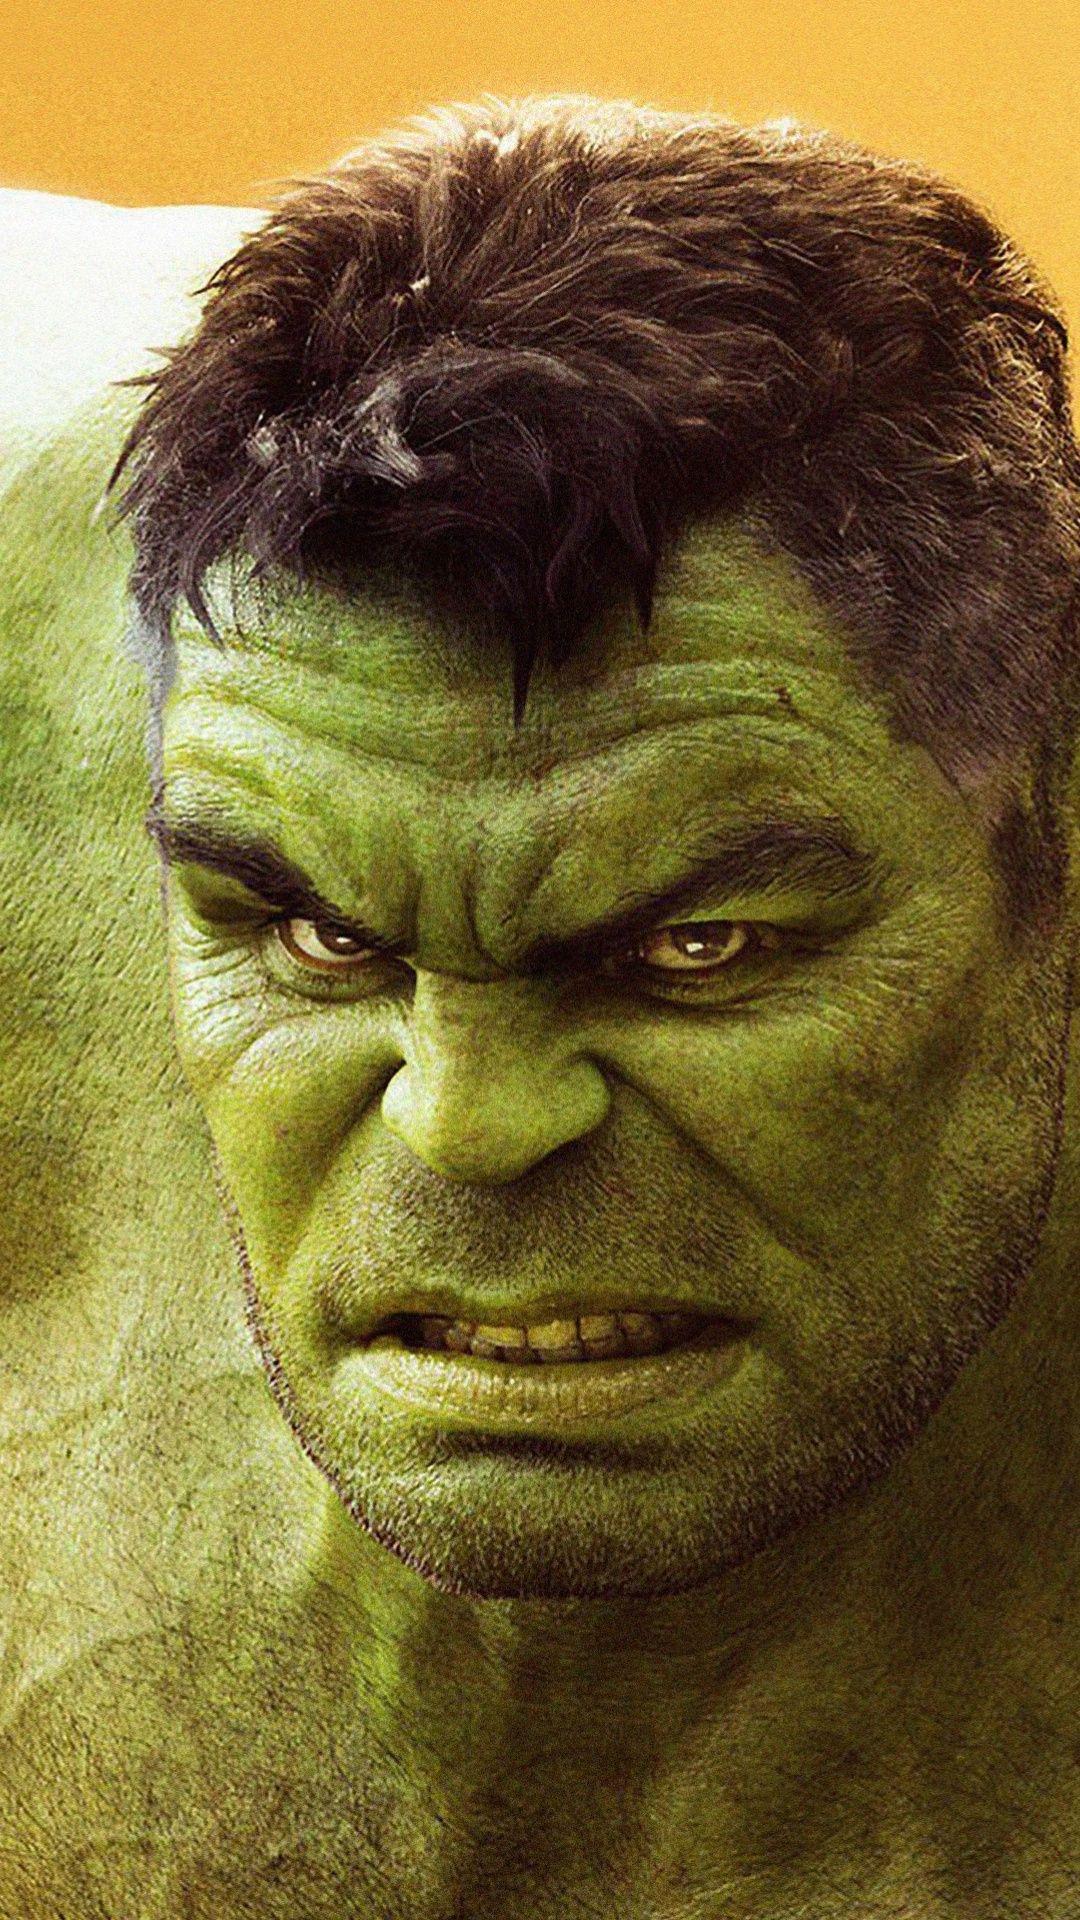 Mighty hulk, green, superhero, movie, Avengers: Infinity War, 1080x1920 wallpaper. Hulk avengers, Hulk marvel, Green superhero